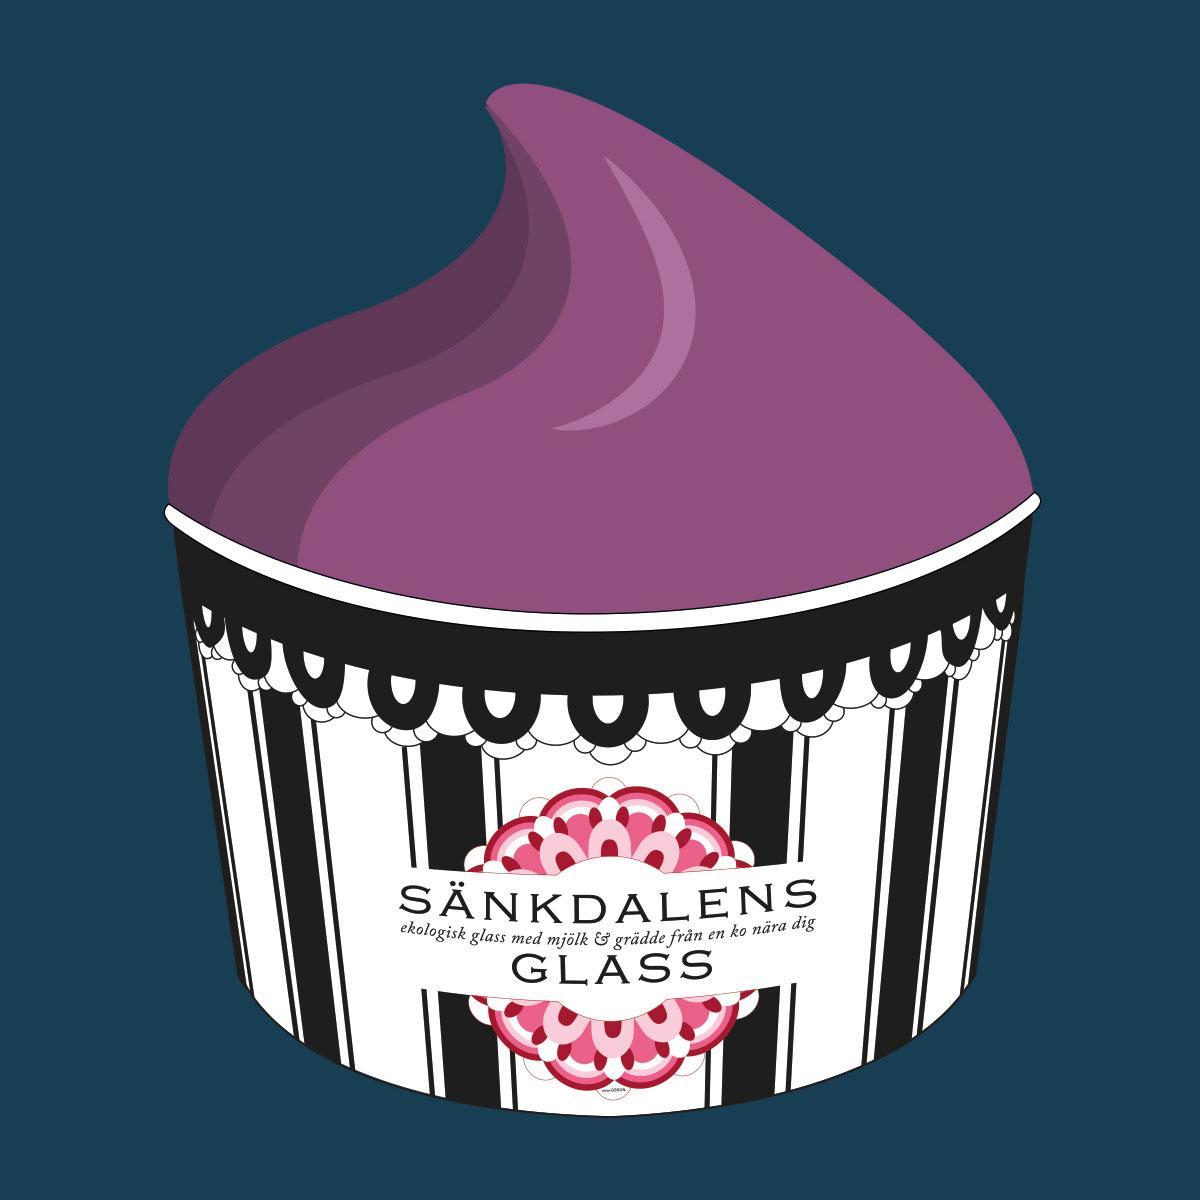 Heidelbeer-Eis Sänkdalens glass